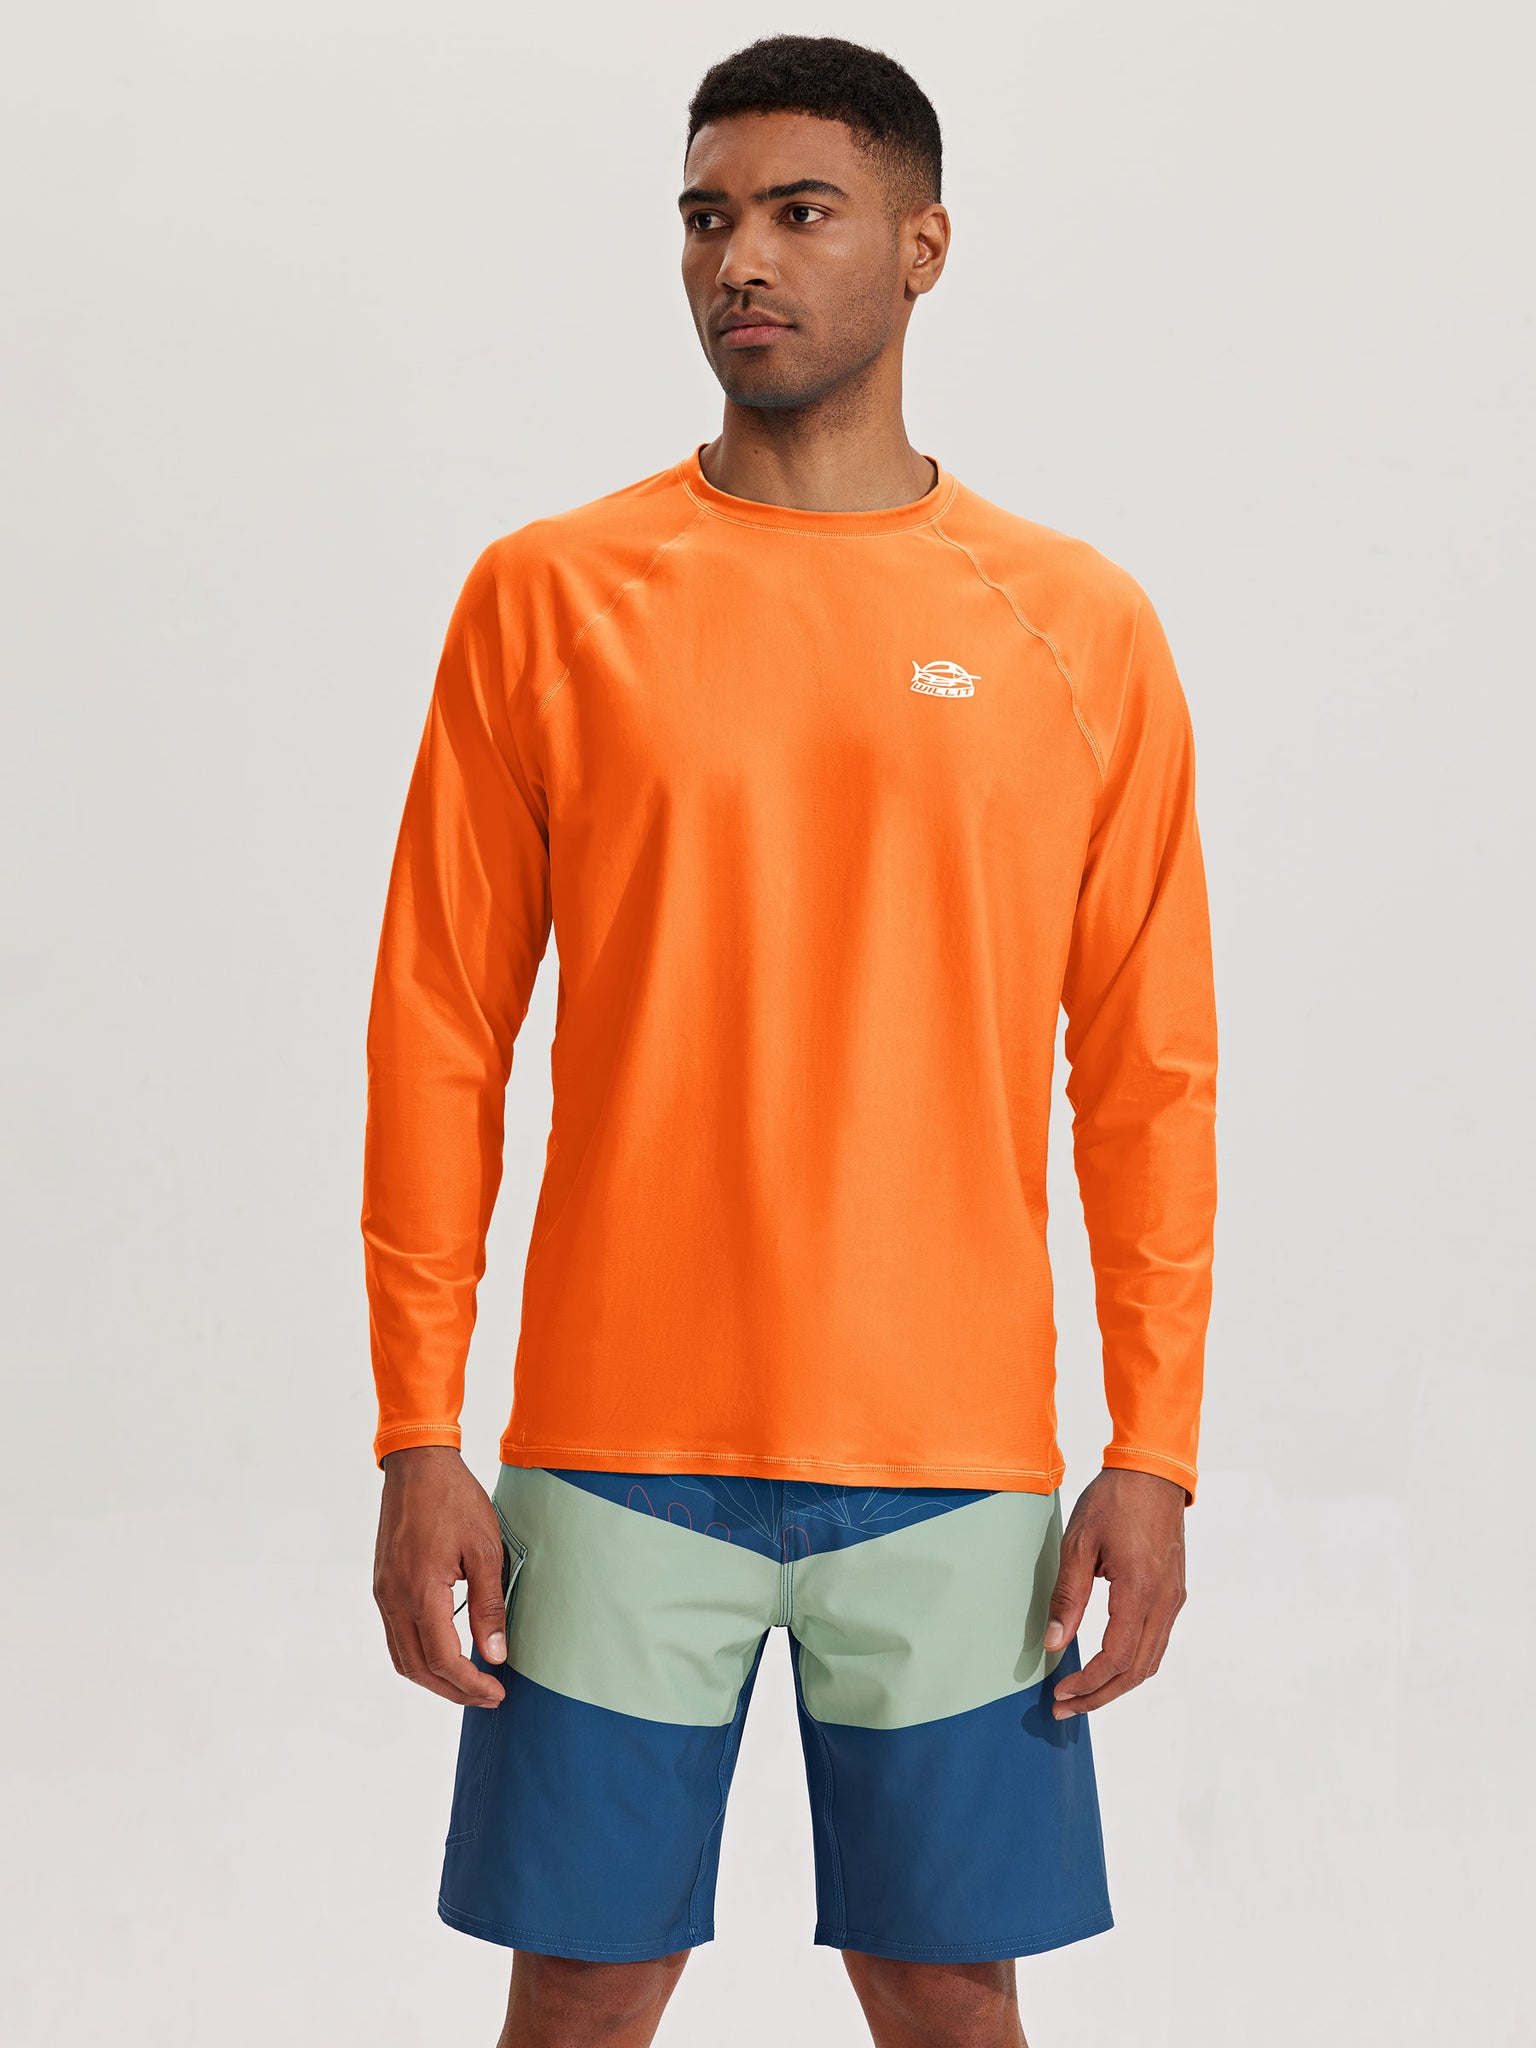 Men's Sun Protection Long Sleeve Shirt_Orange_model2